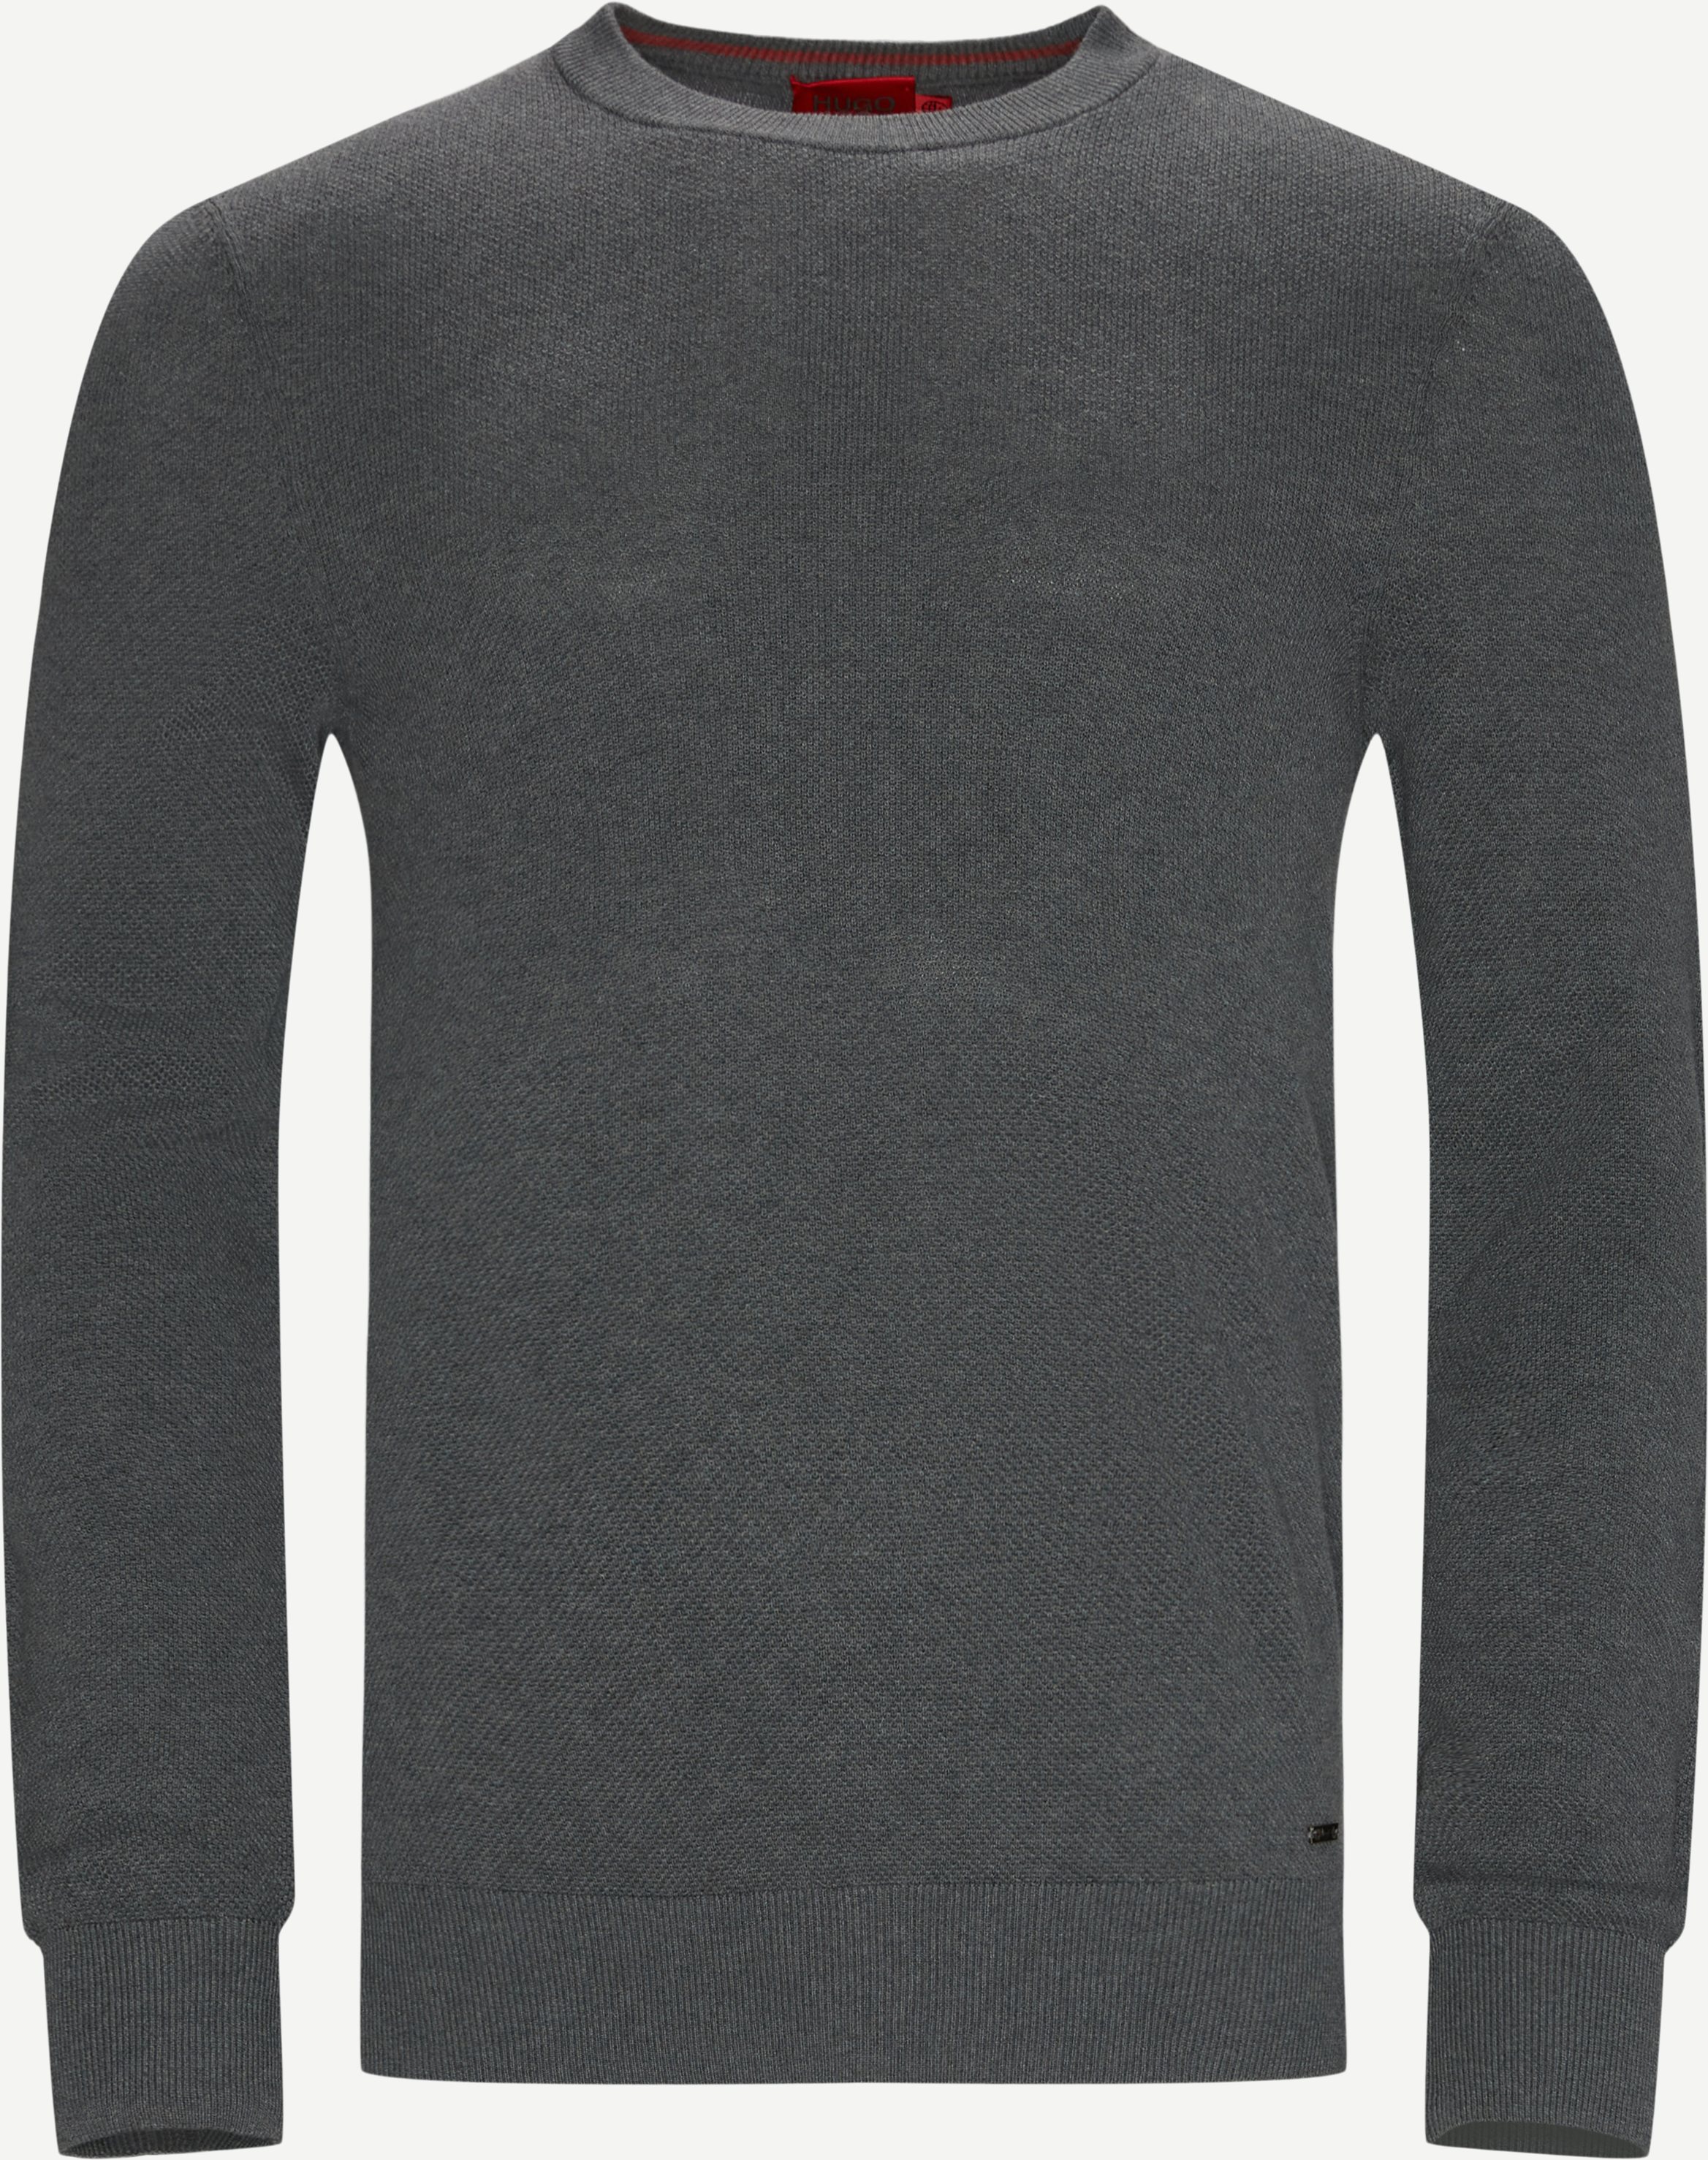 San Clemens2 Knit - Knitwear - Slim fit - Grey